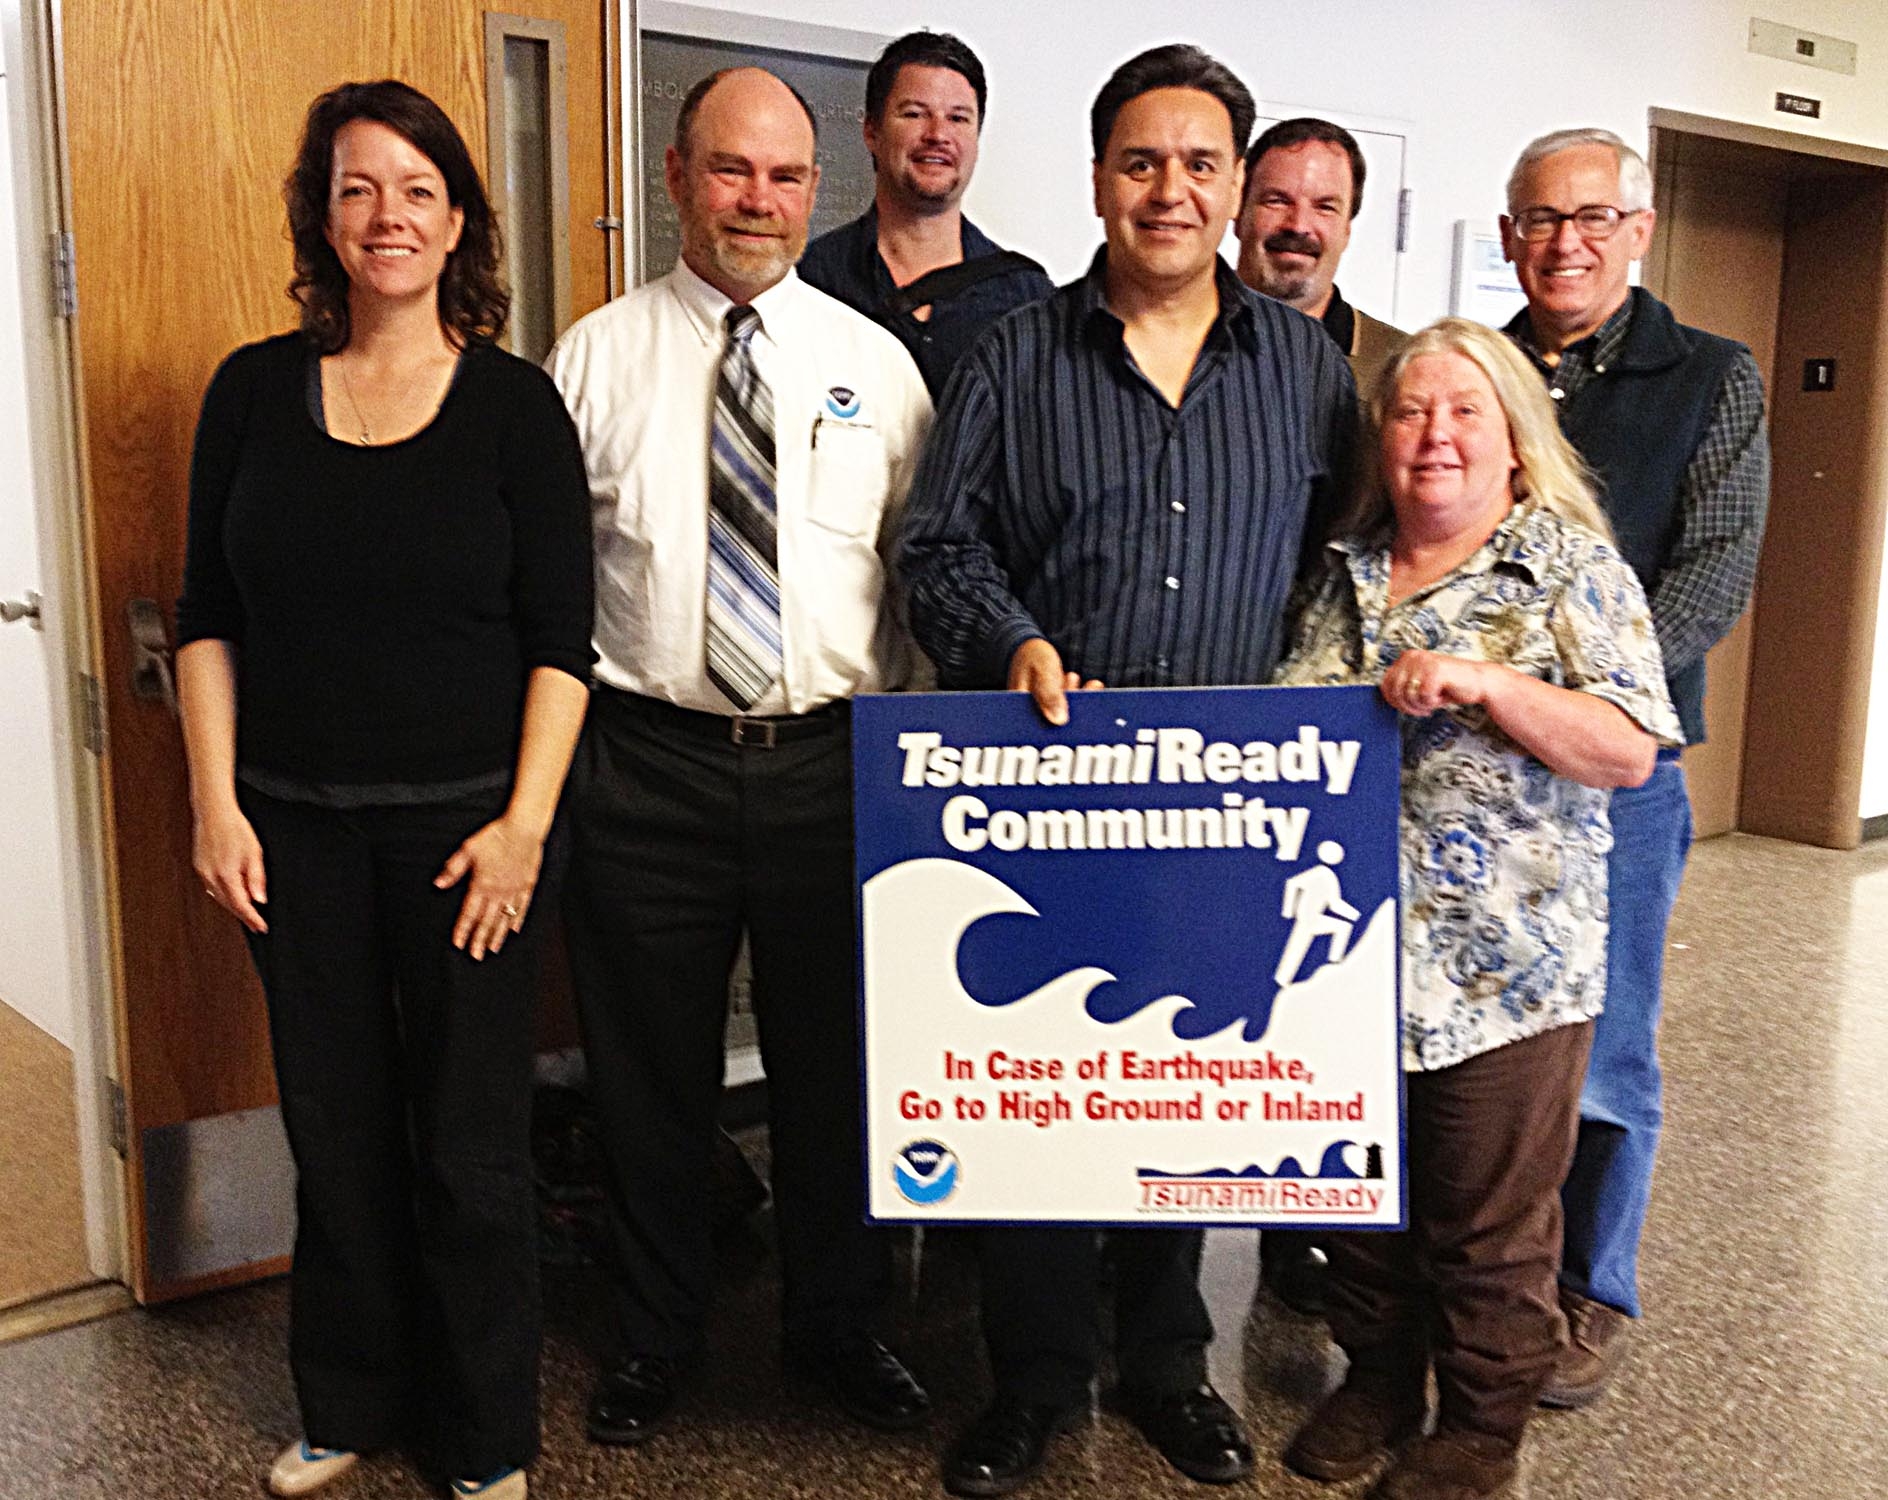 King Salmon, CA presentation of becoming TsunamiReady